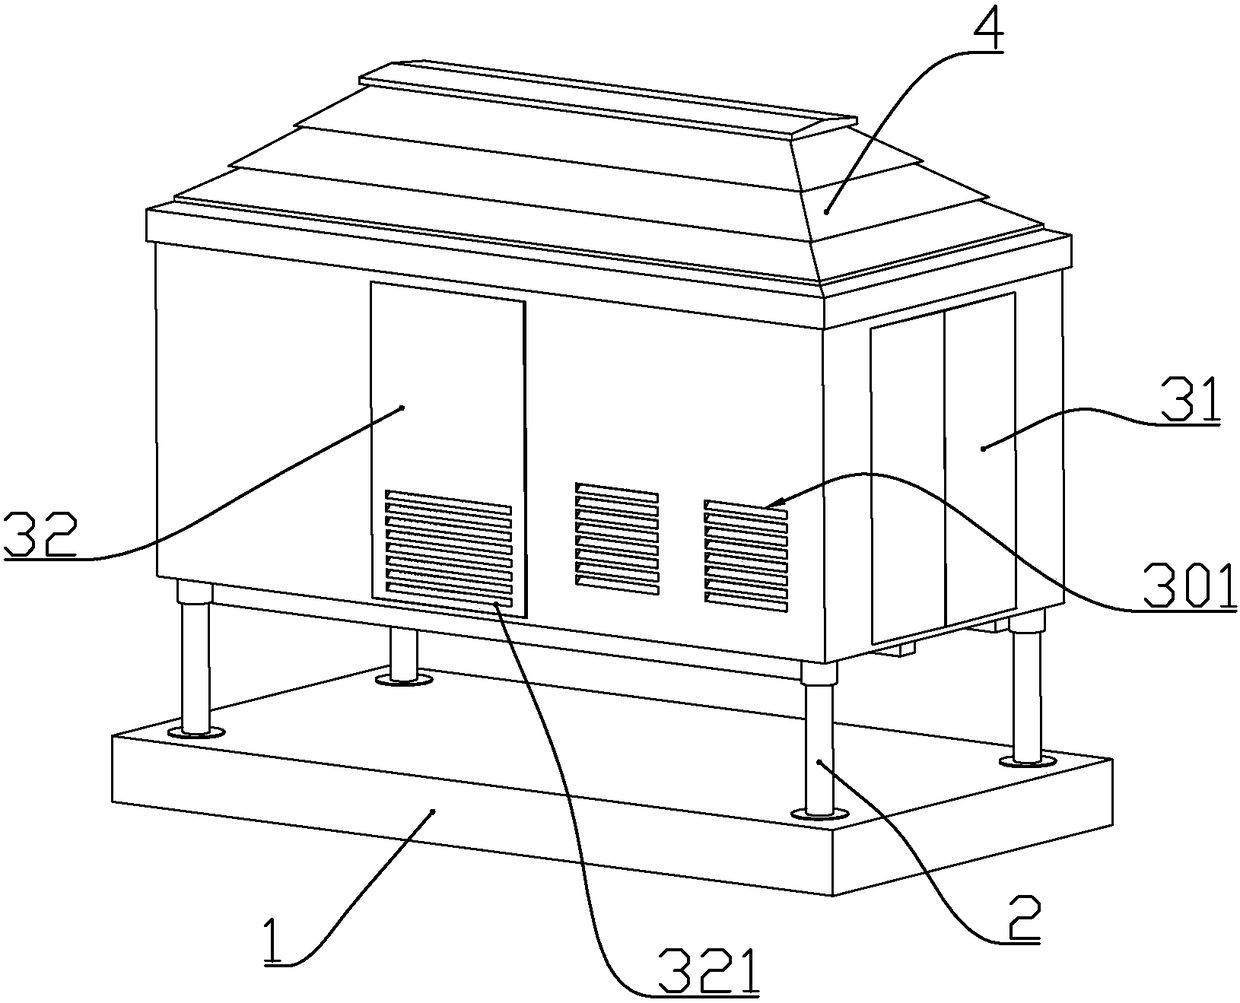 A box type substation